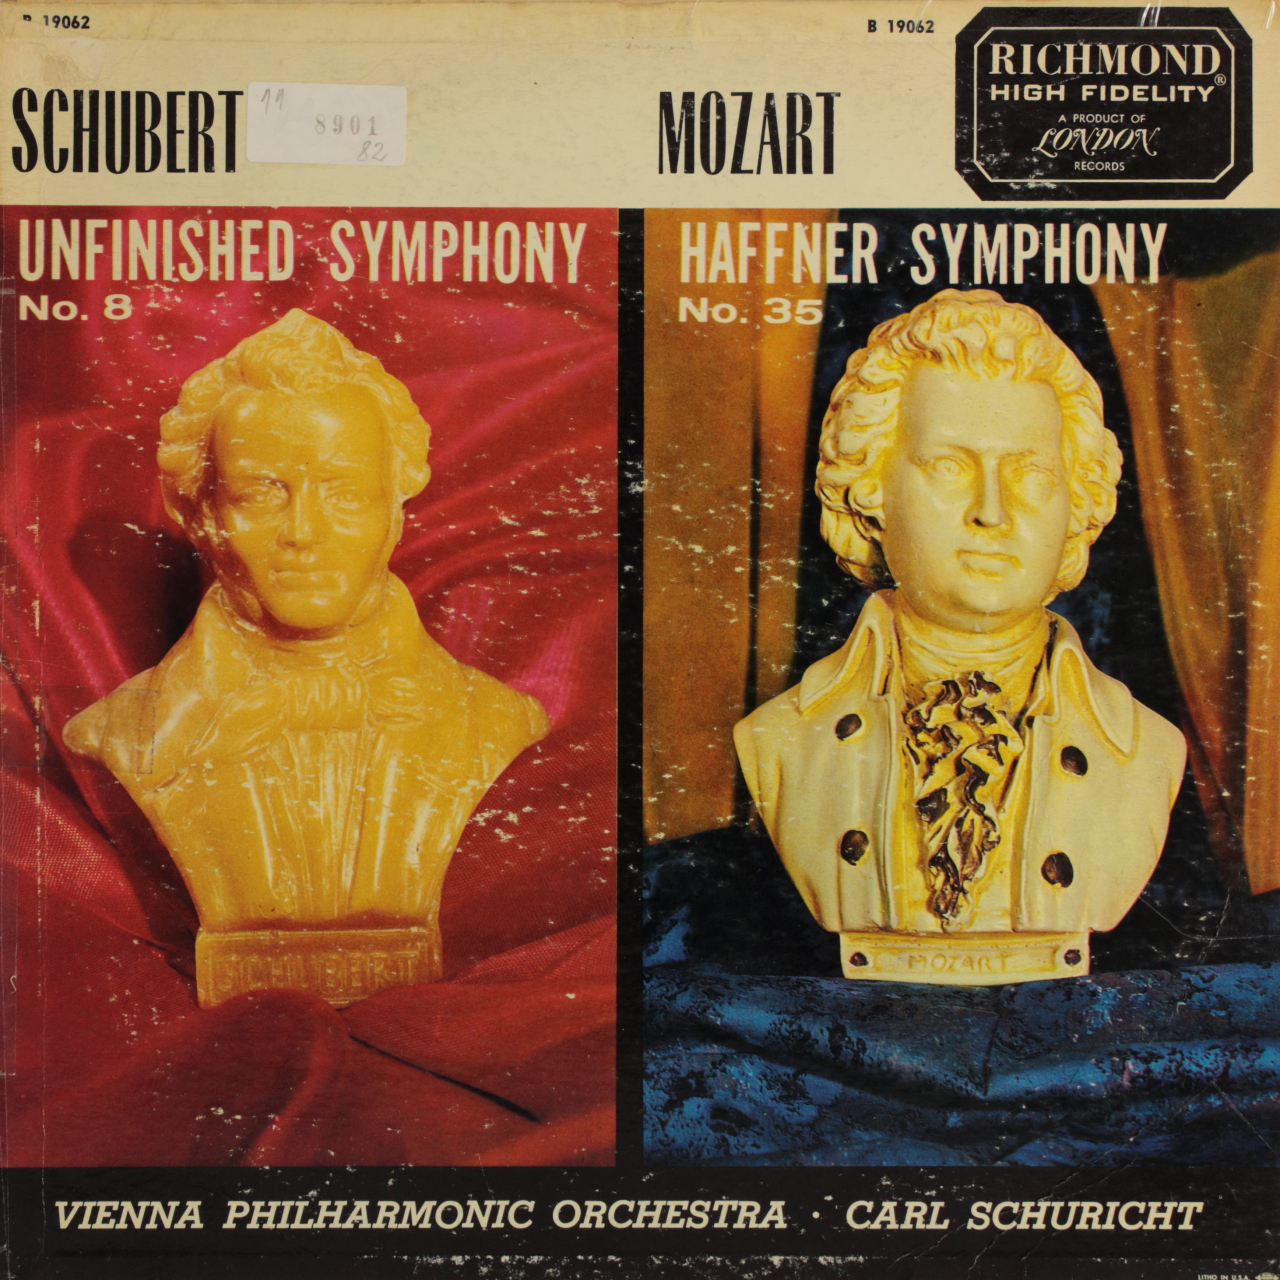 Schubert: Unfinished Symphony No. 8 / Mozart: Haffner Smyphony No. 35